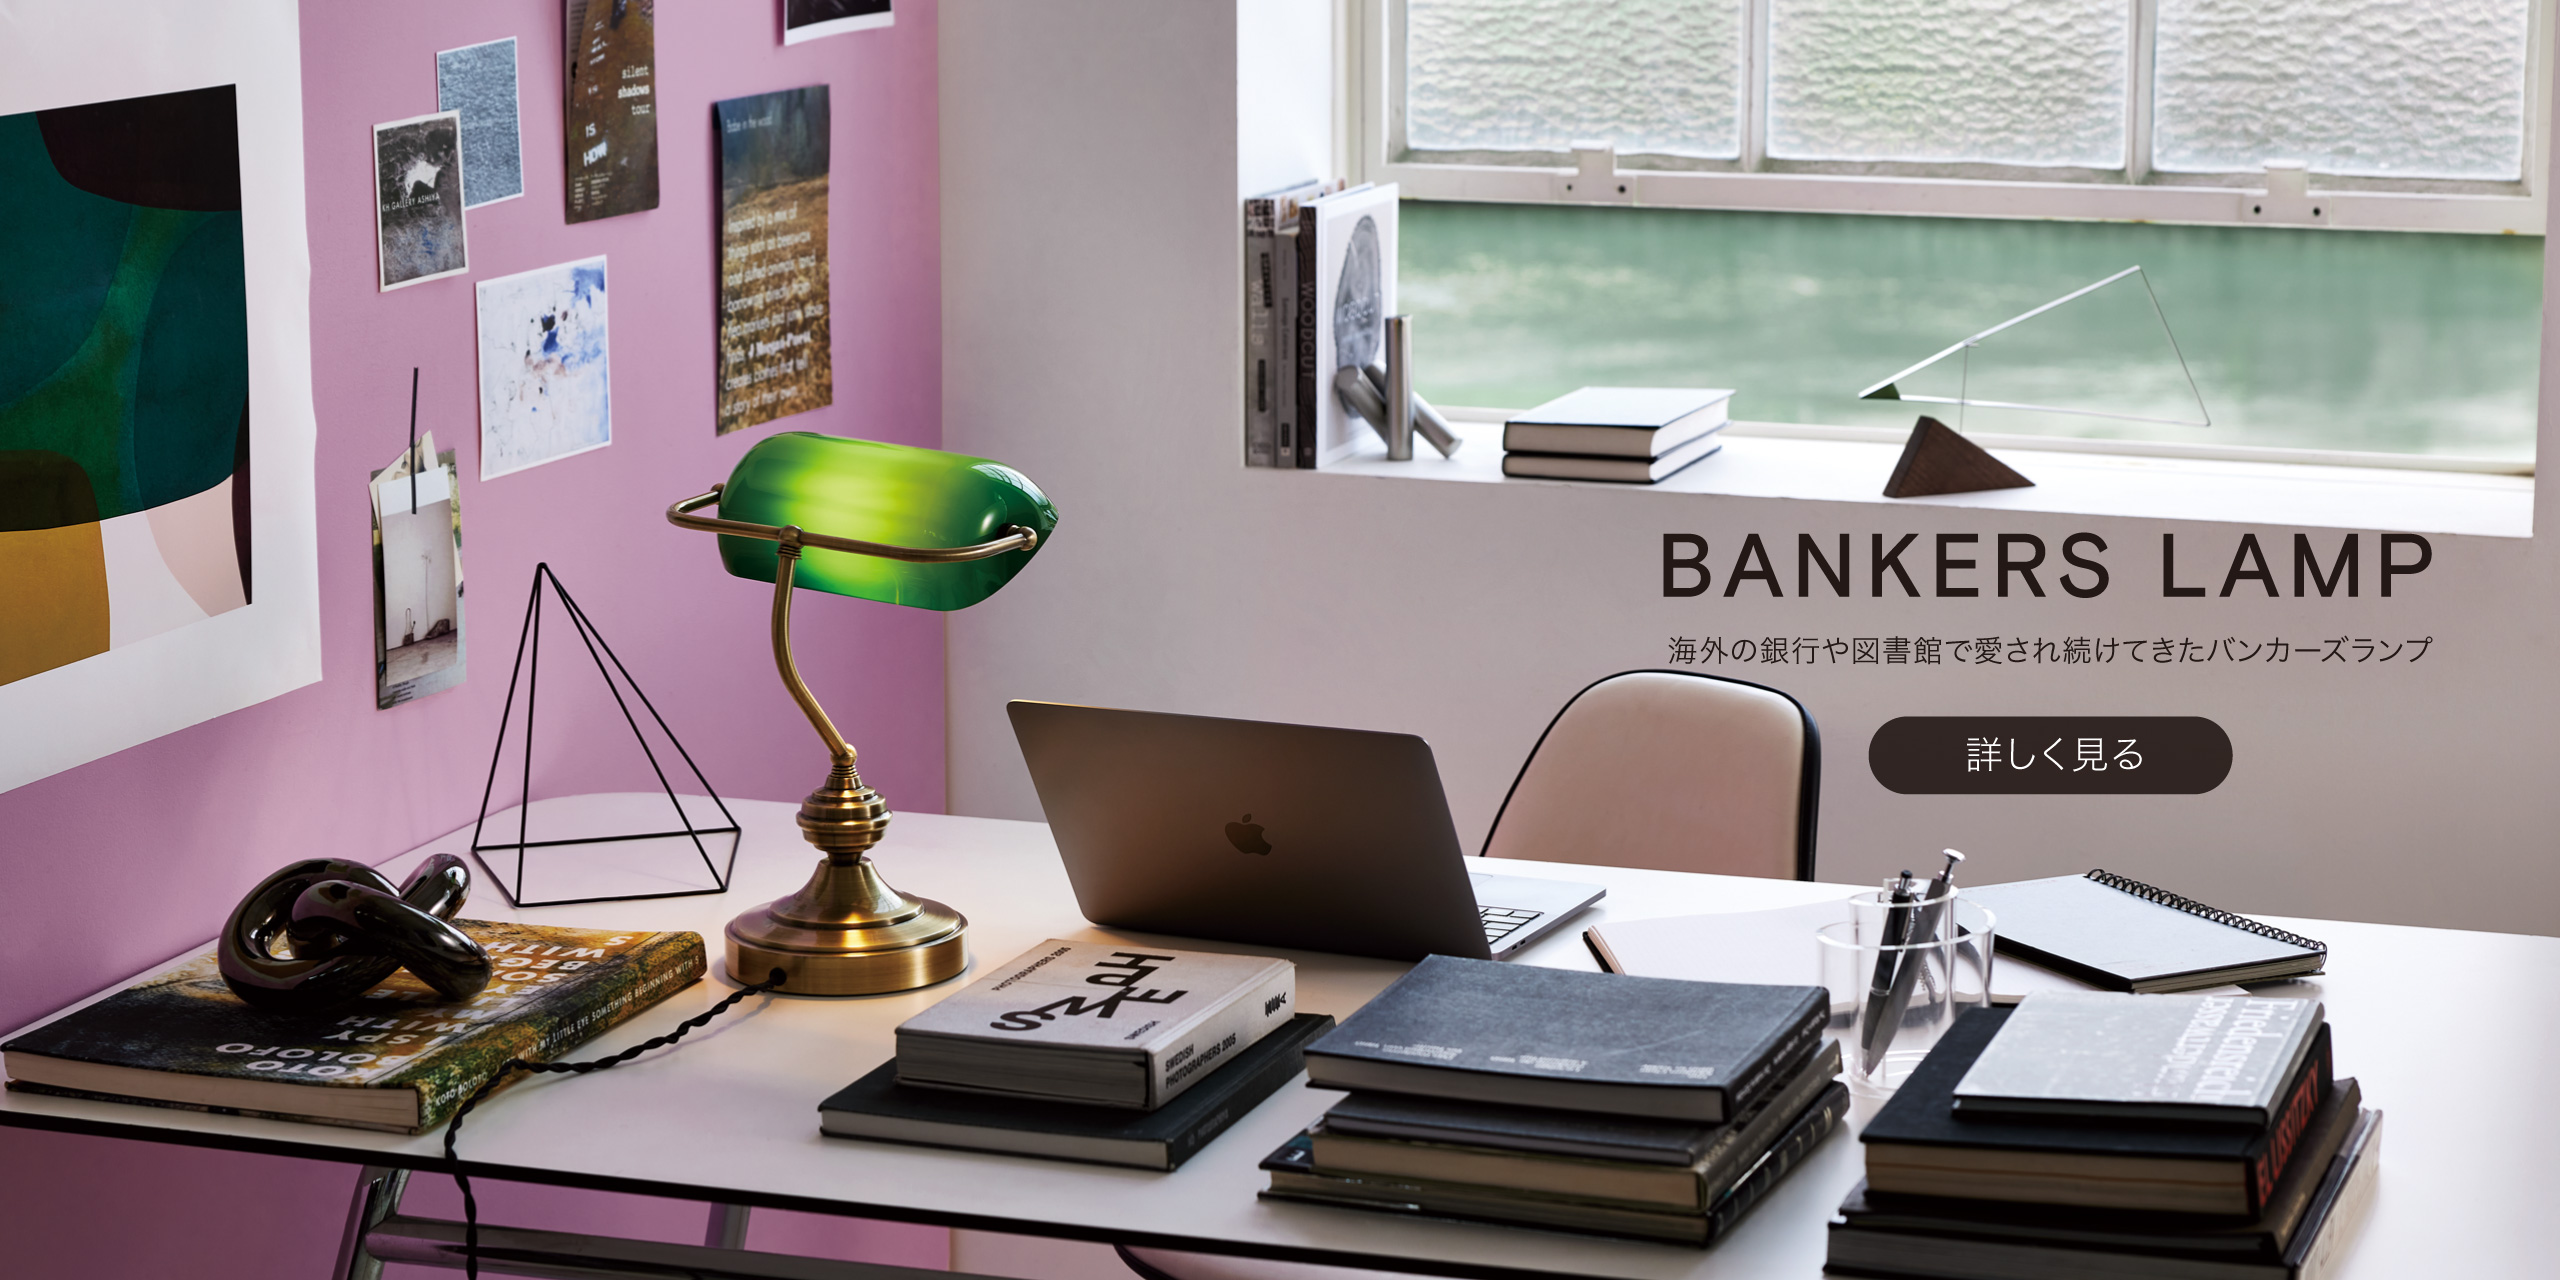 BANKERS LAMP 海外の銀行や図書館で愛され続けてきたデスクトップ照明「バンカーズランプ」